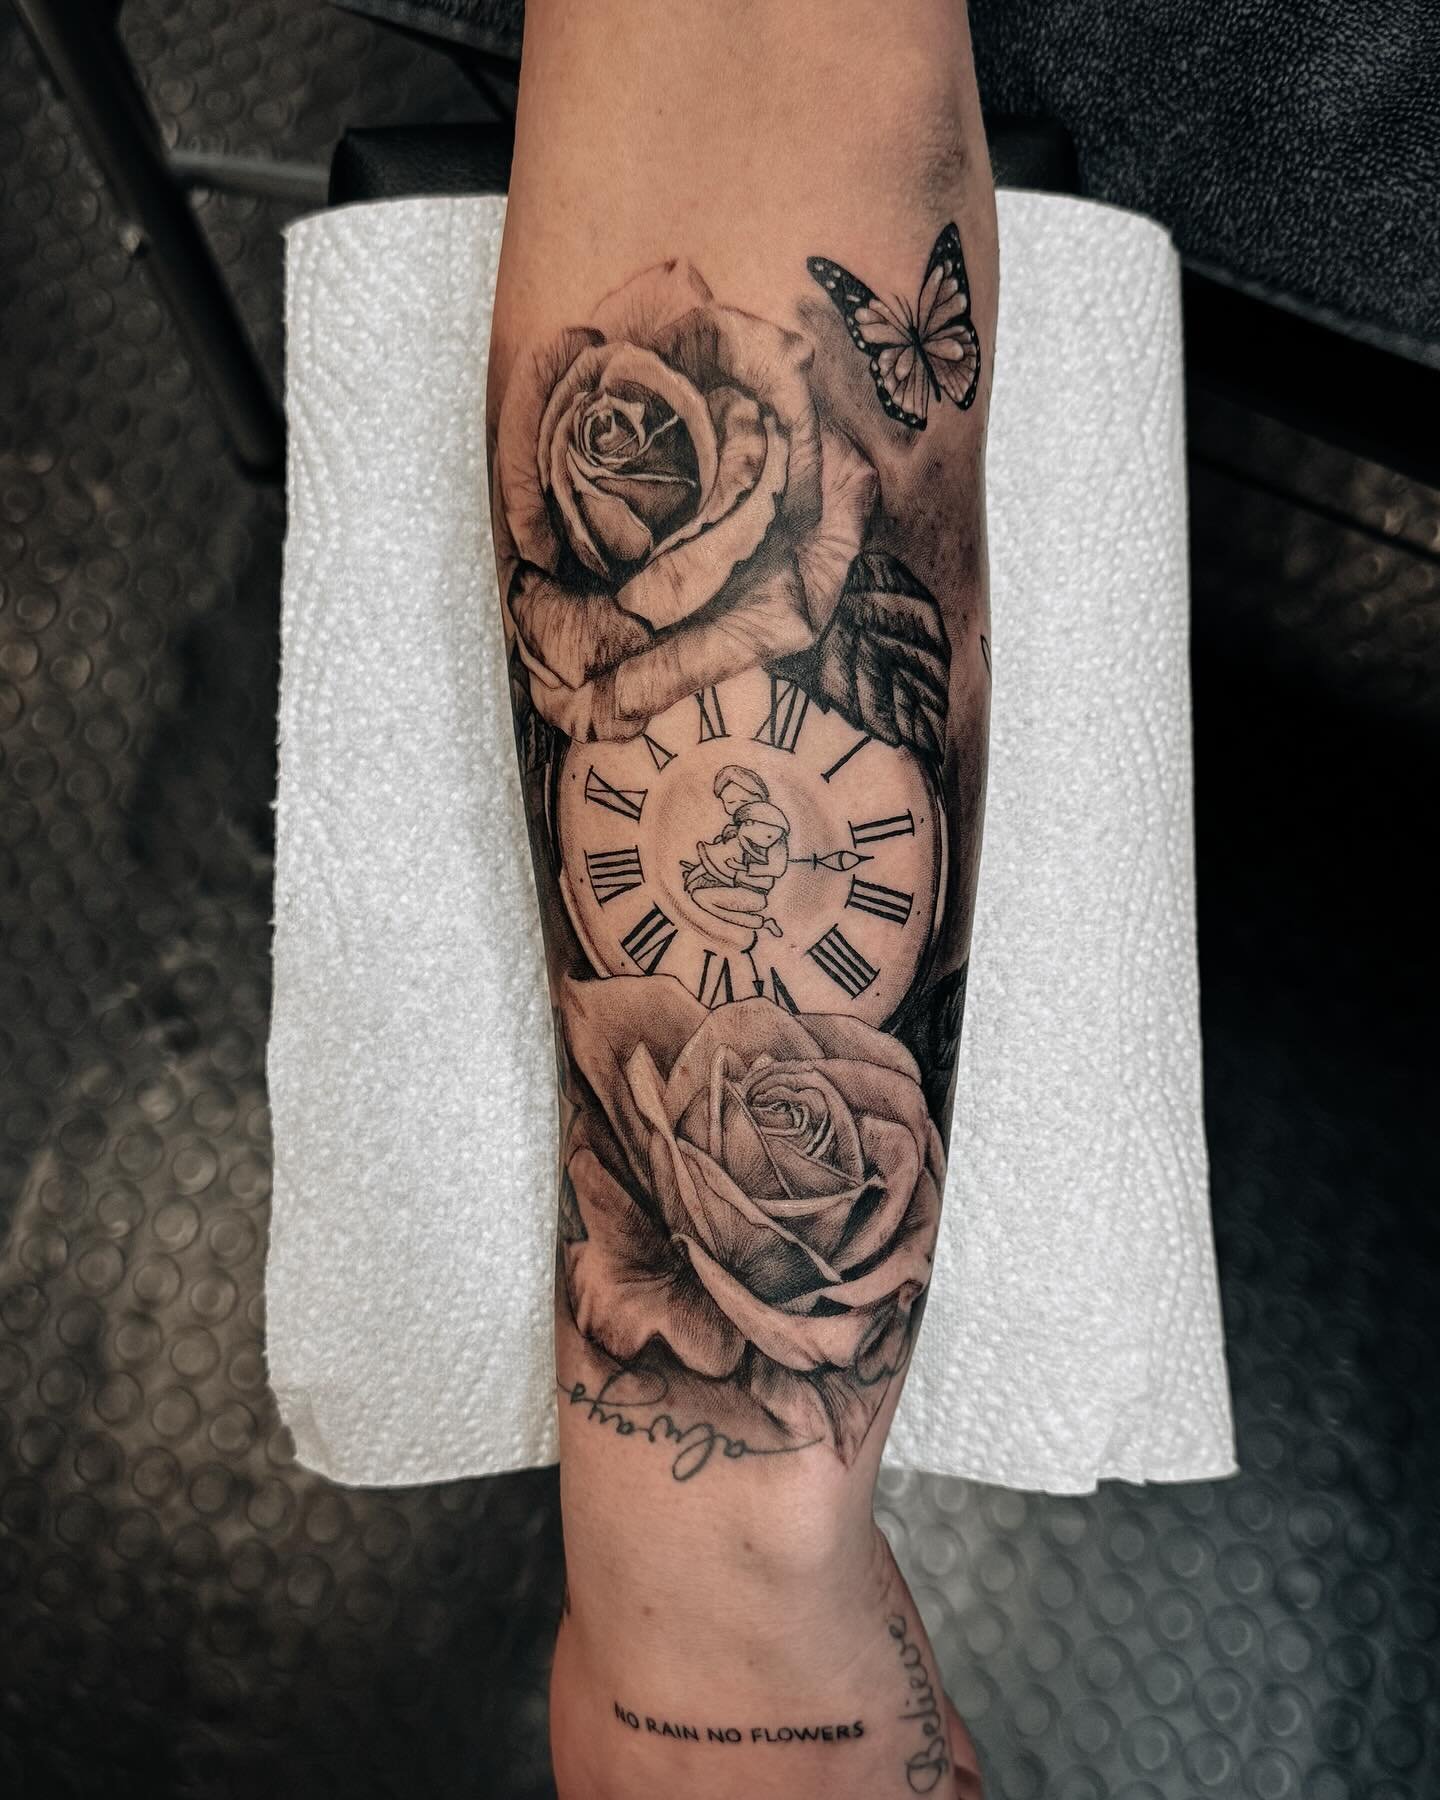 🌹 
.
.
.
.
.
#tattoo #tattoos #art #tattooartist #ink #inked #photooftheday #illustration #tattooed #tattooideas #rosetattoo #birsfelden #basel #studio #switzerland #tattooing #zurich #tattoed #tattooformen  #thirtyfourtattoo #clocktattoo #floraltat